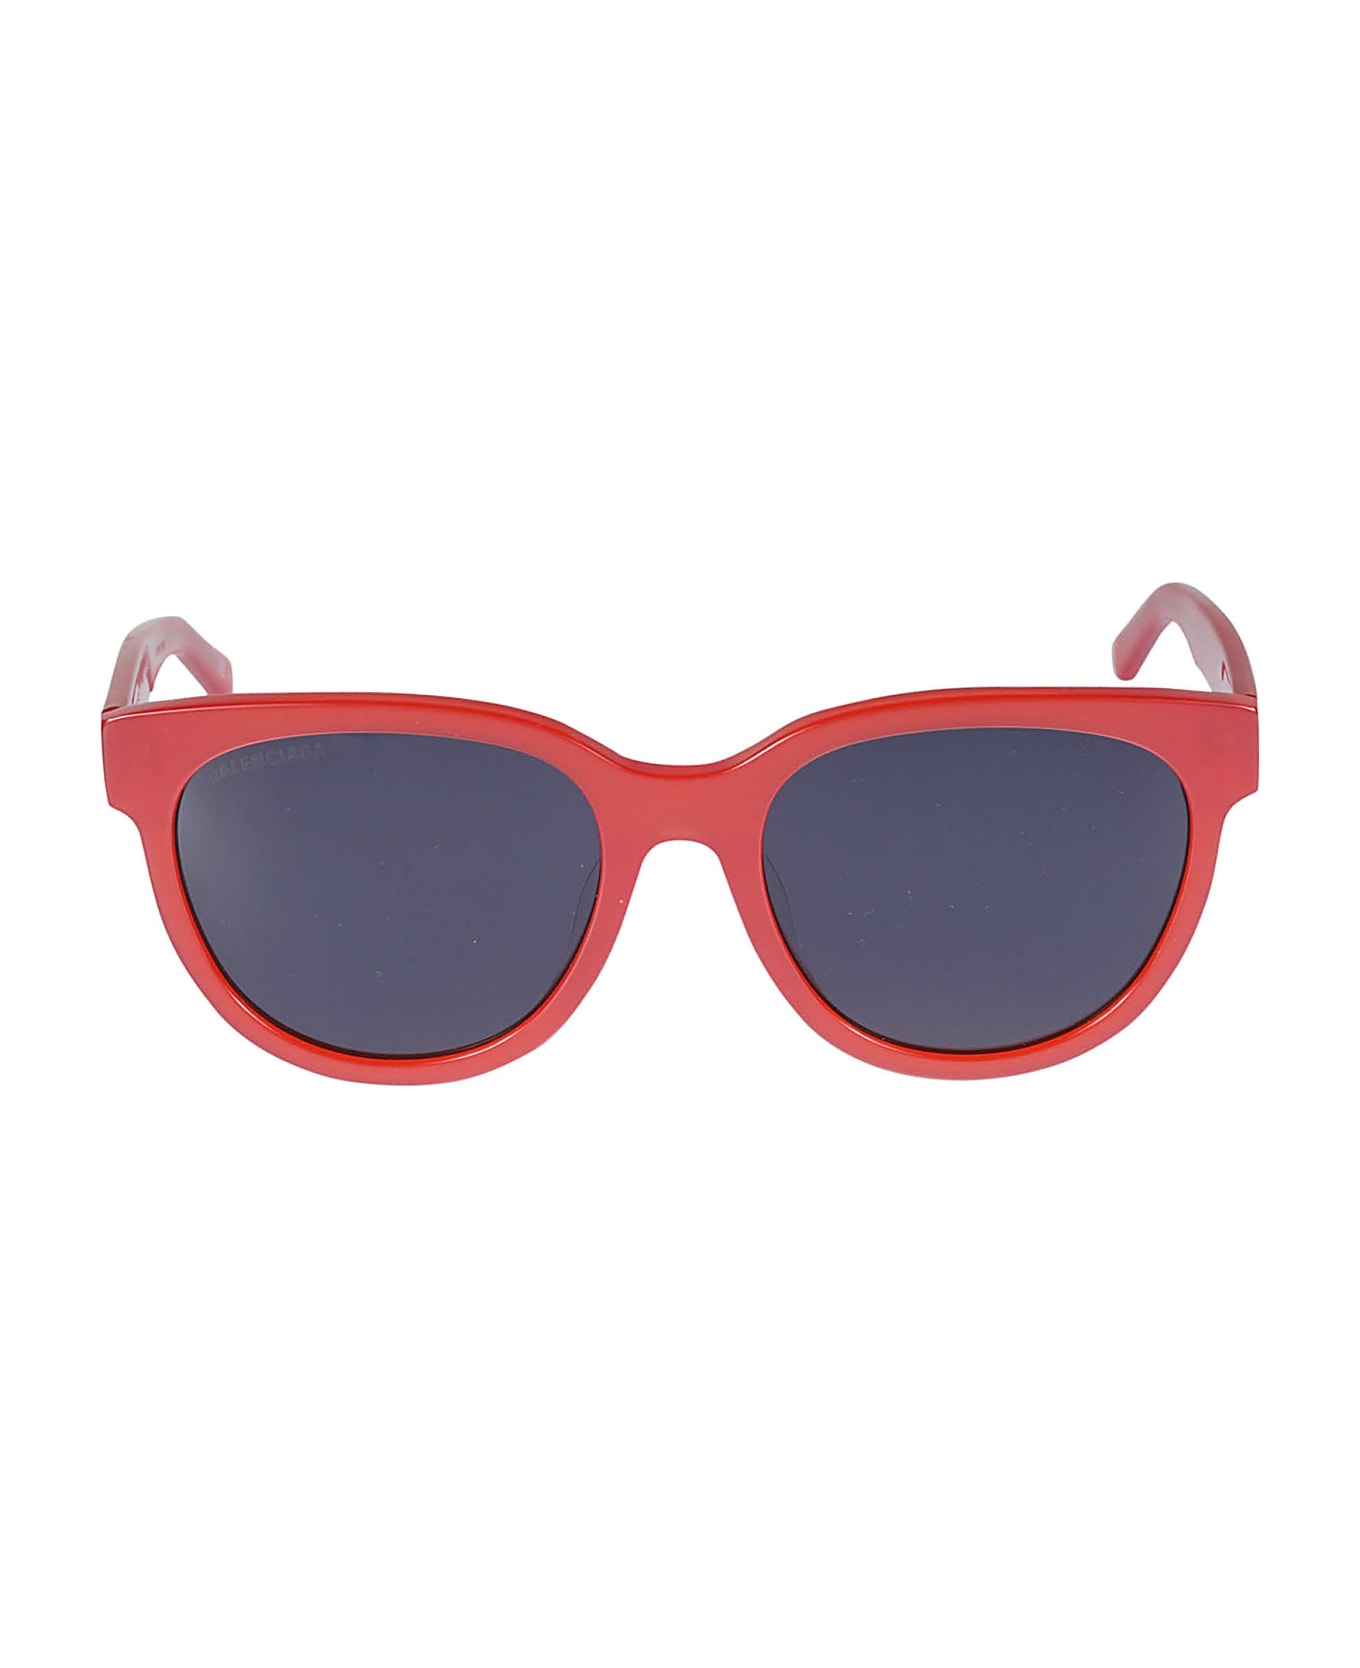 Balenciaga Eyewear Everyday Sunglasses - 003 red red blue サングラス